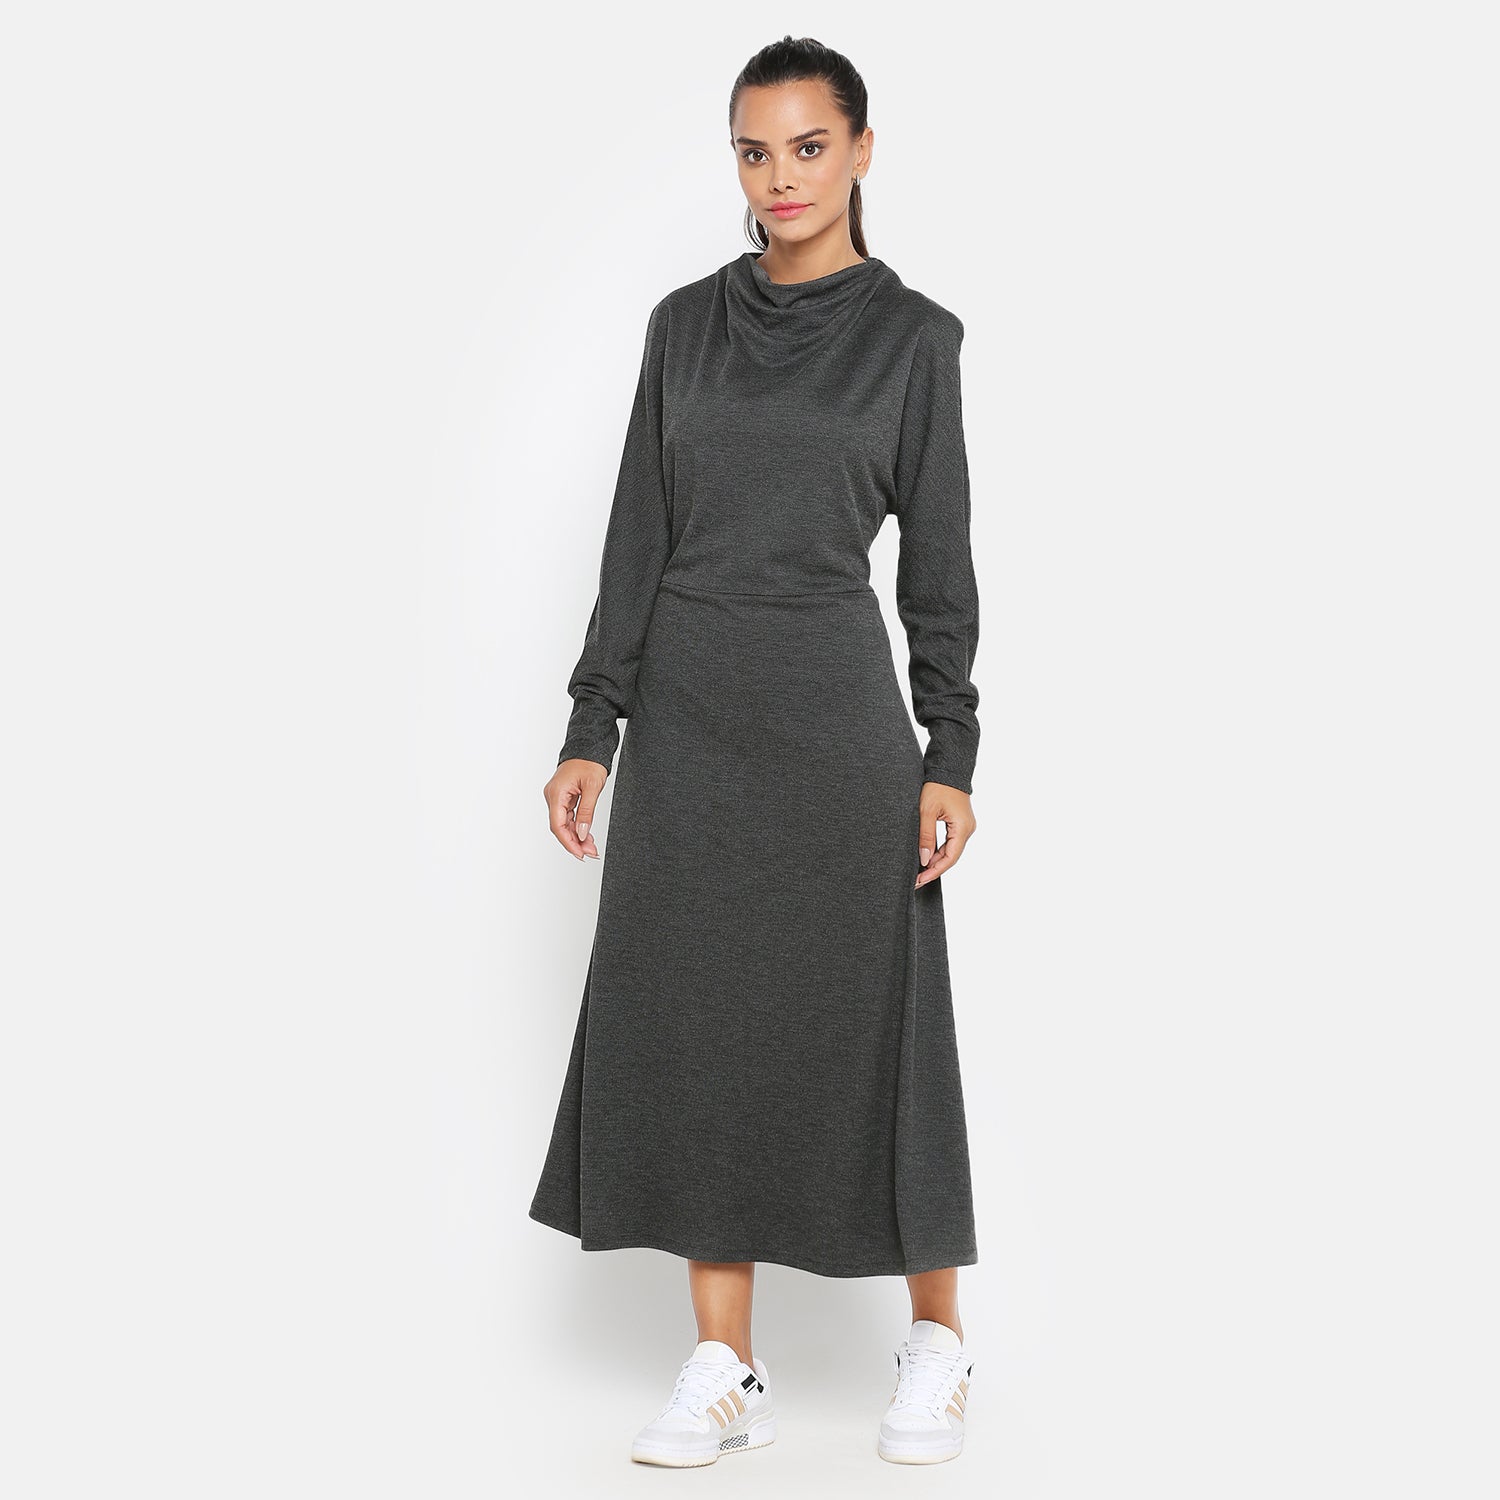 Dark grey knit long dress with cowl neck